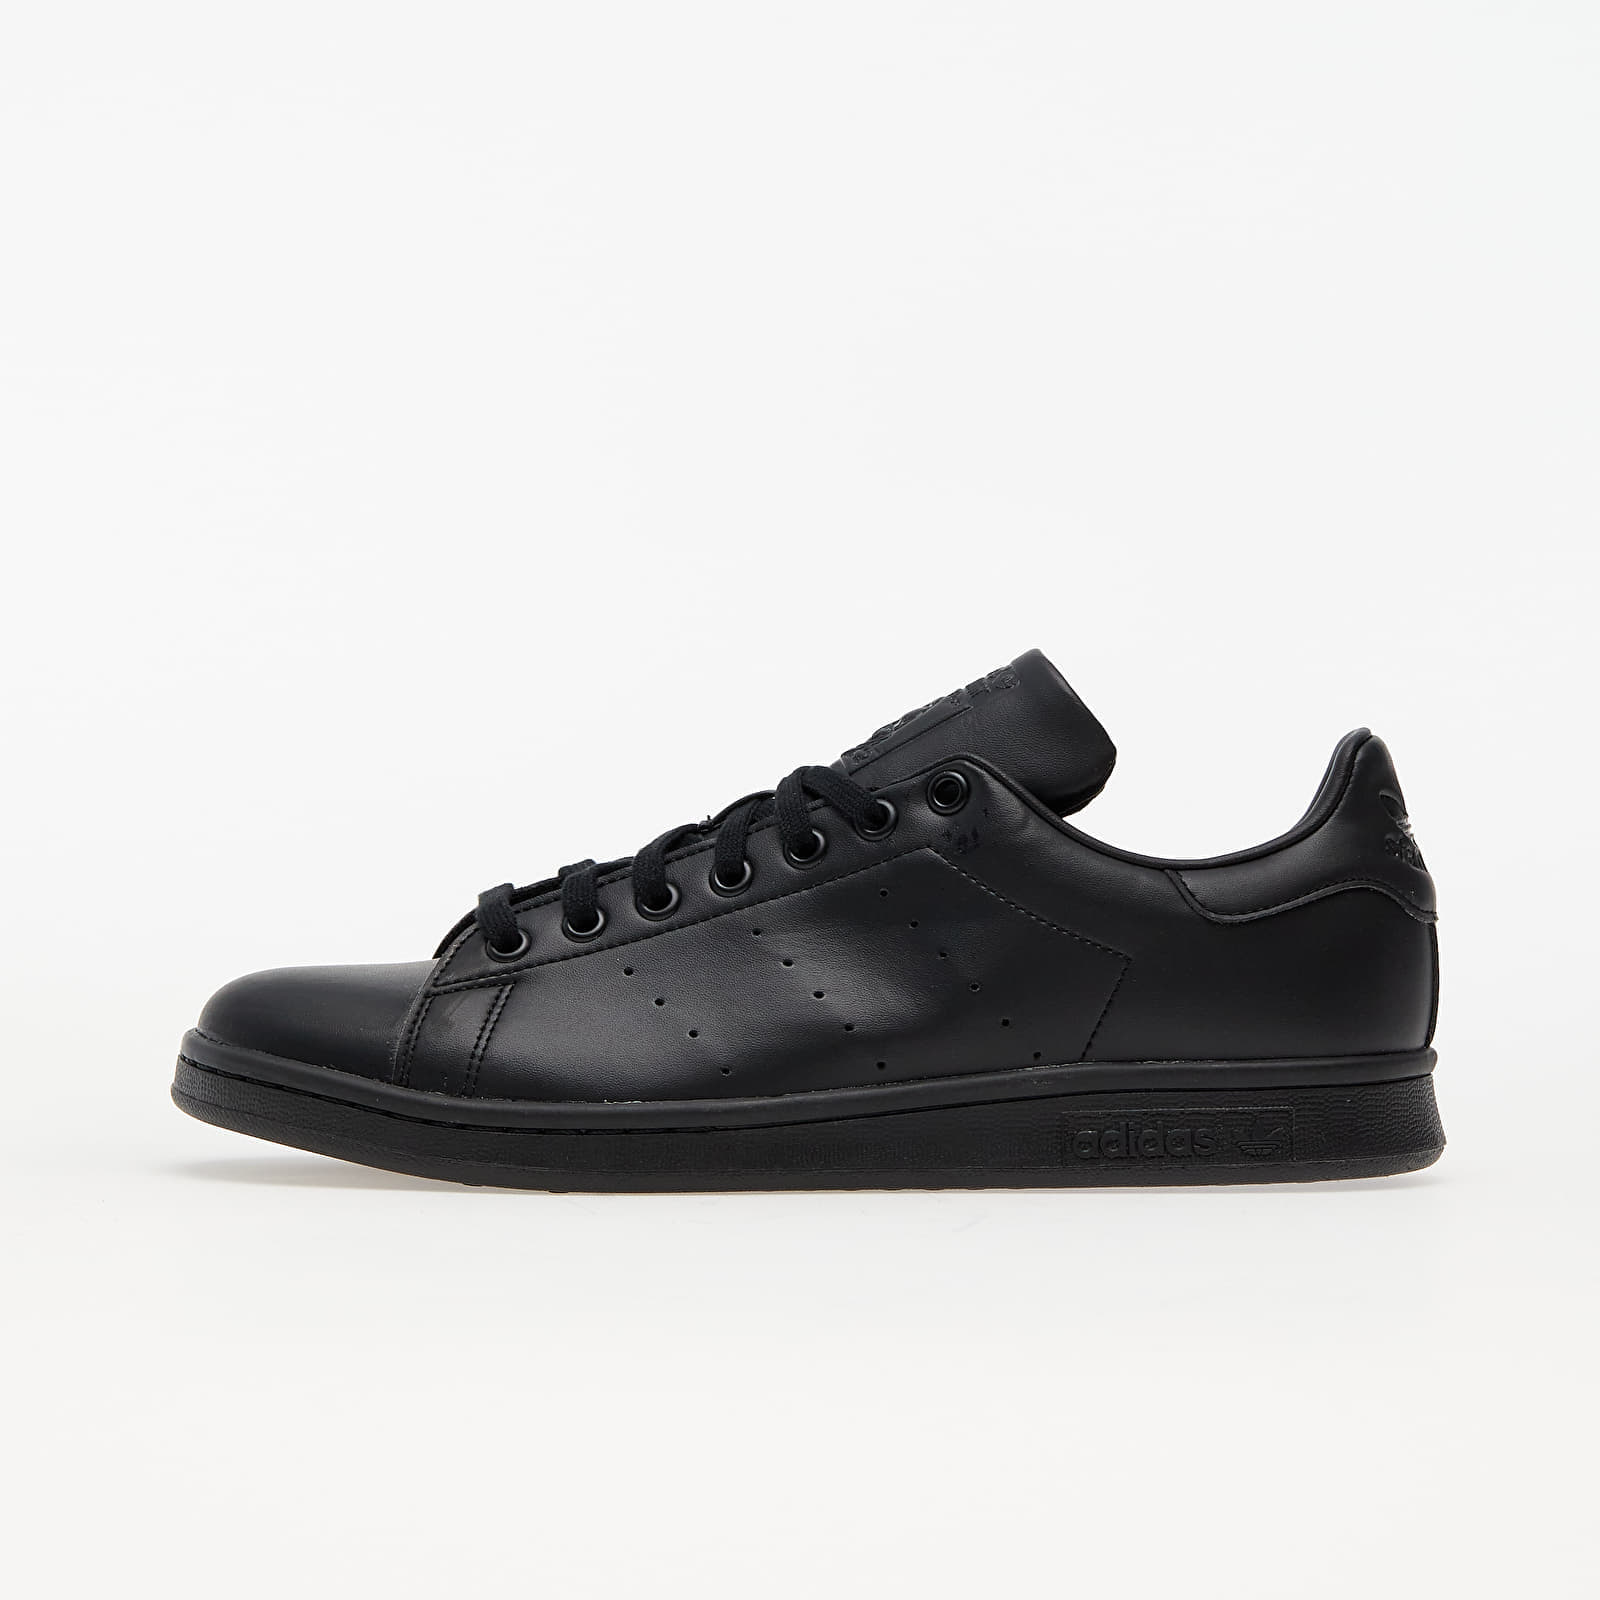 Adidași și pantofi pentru bărbați adidas Originals Stan Smith Core Black/ Core Black/ Ftw White